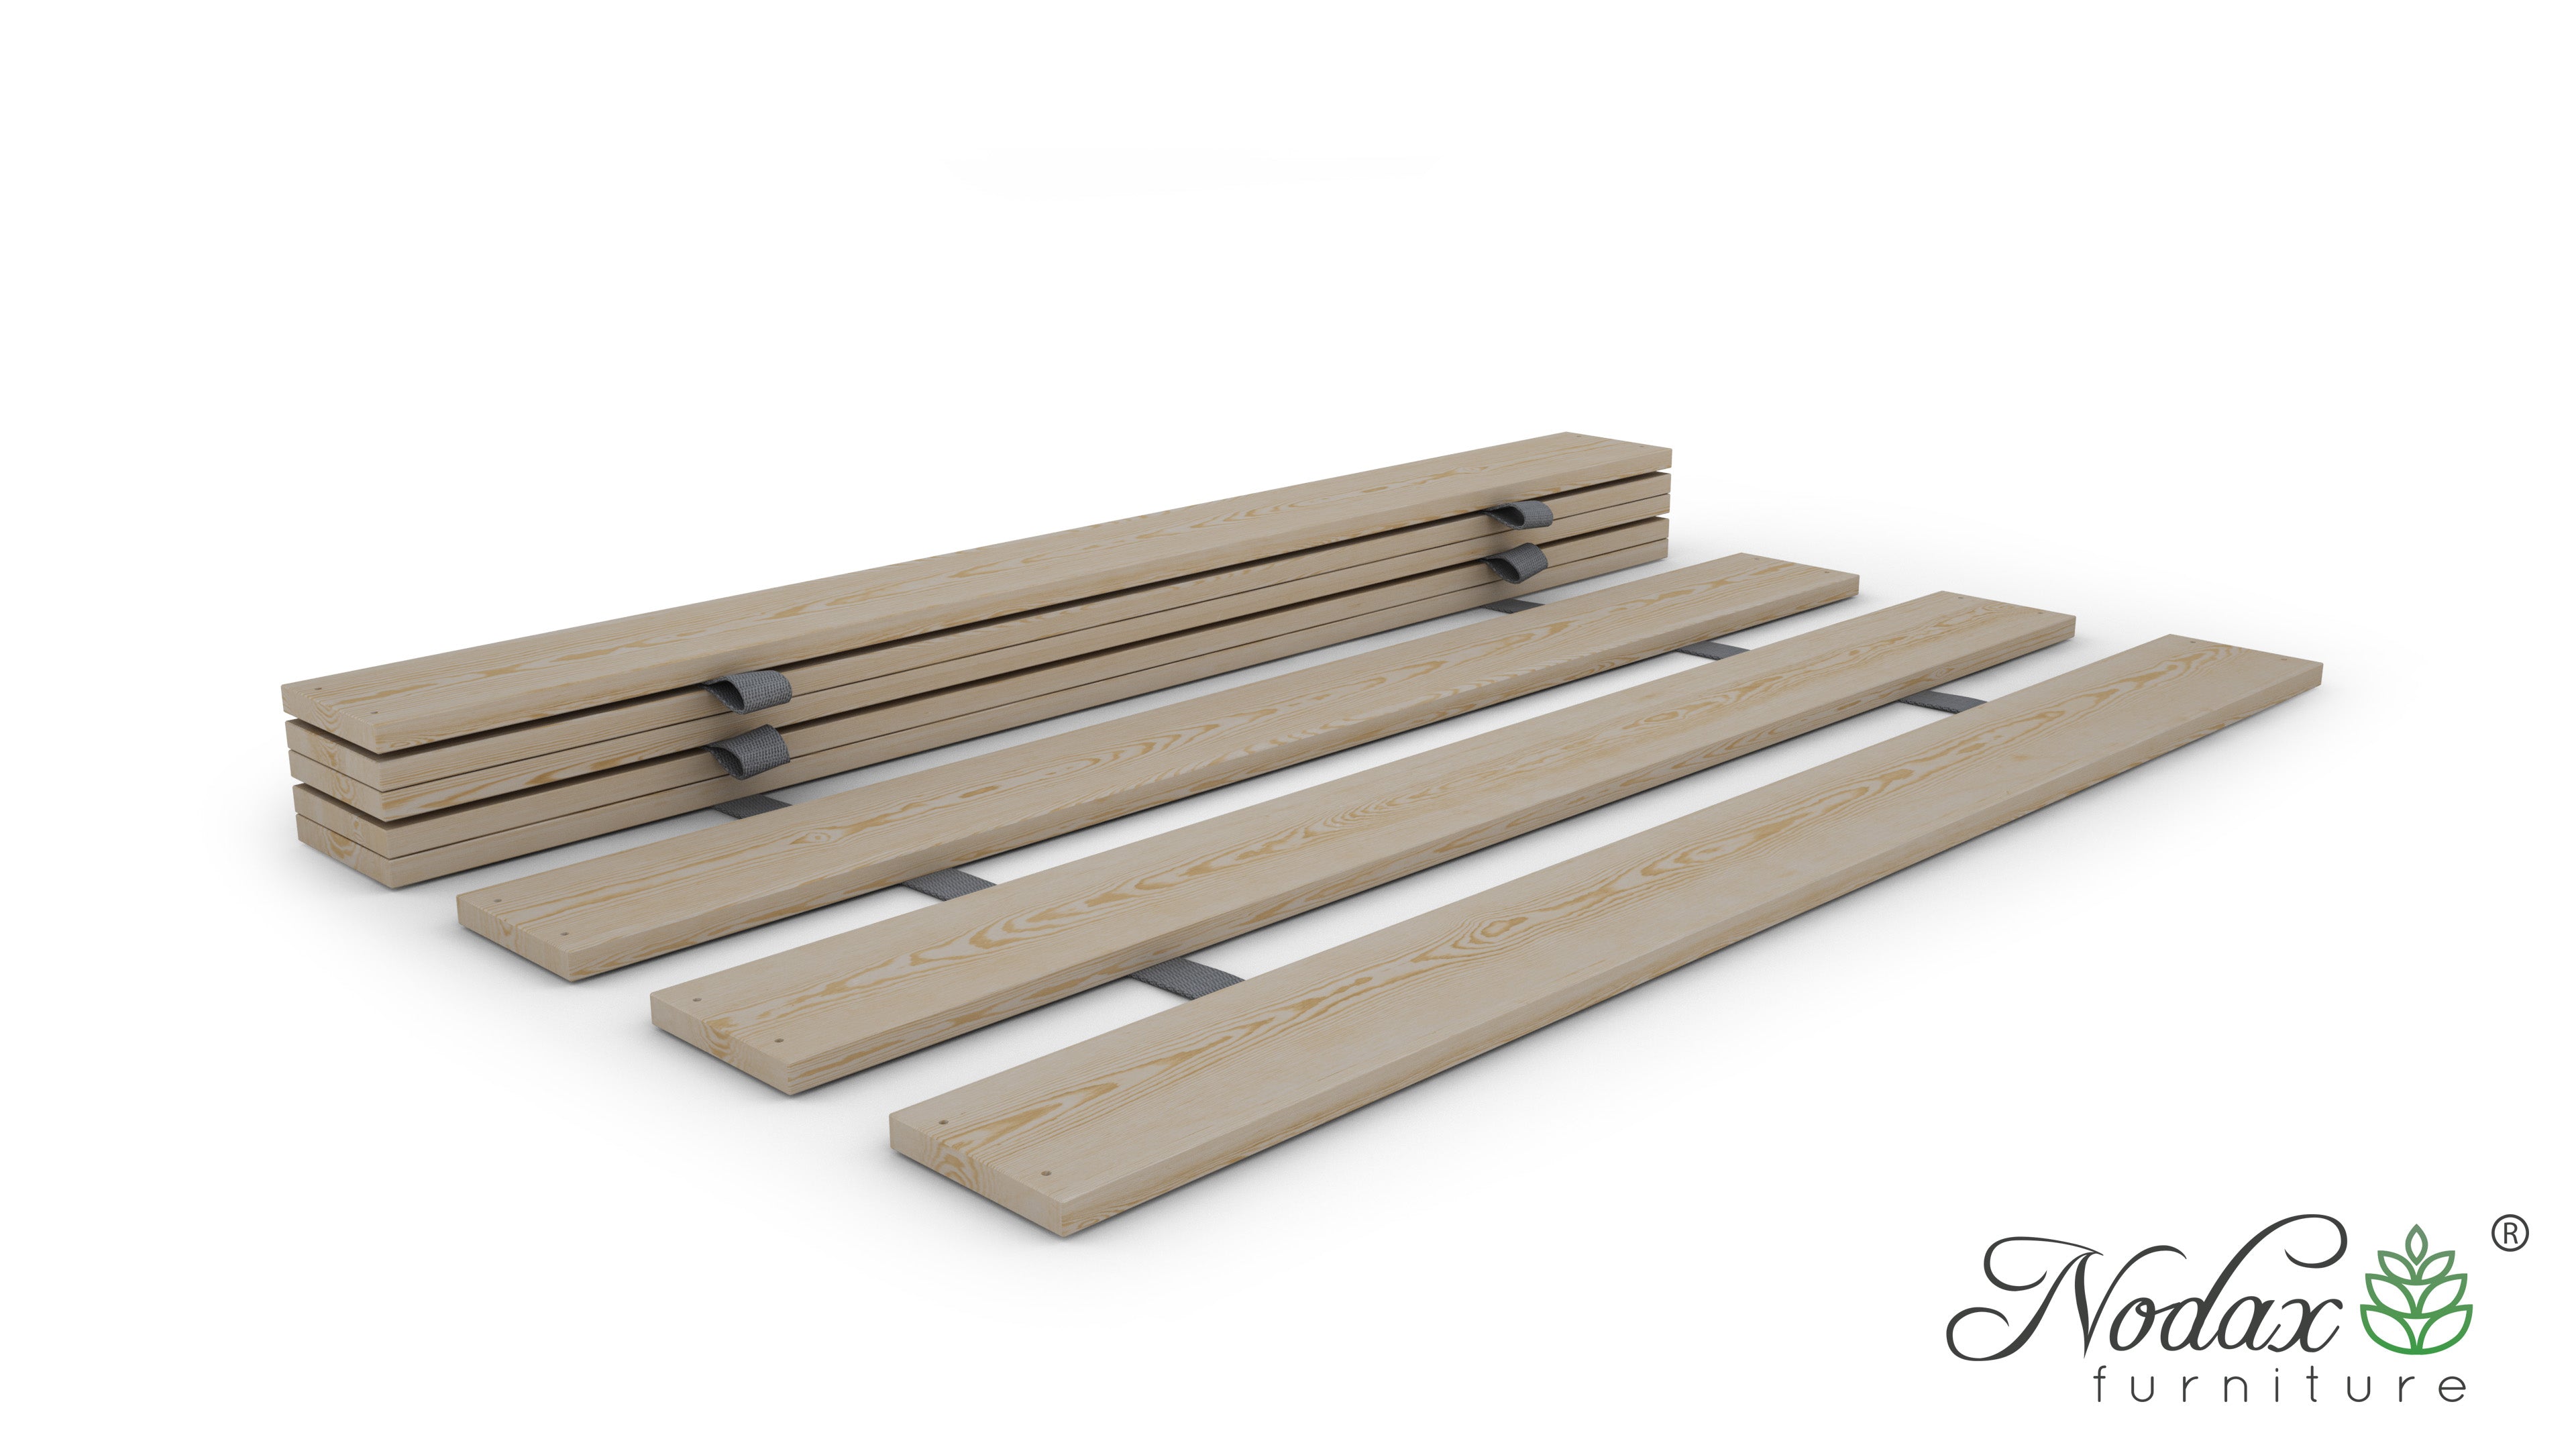 Wooden-slats-Nodax-beautiful-furniture-Polaris-bed